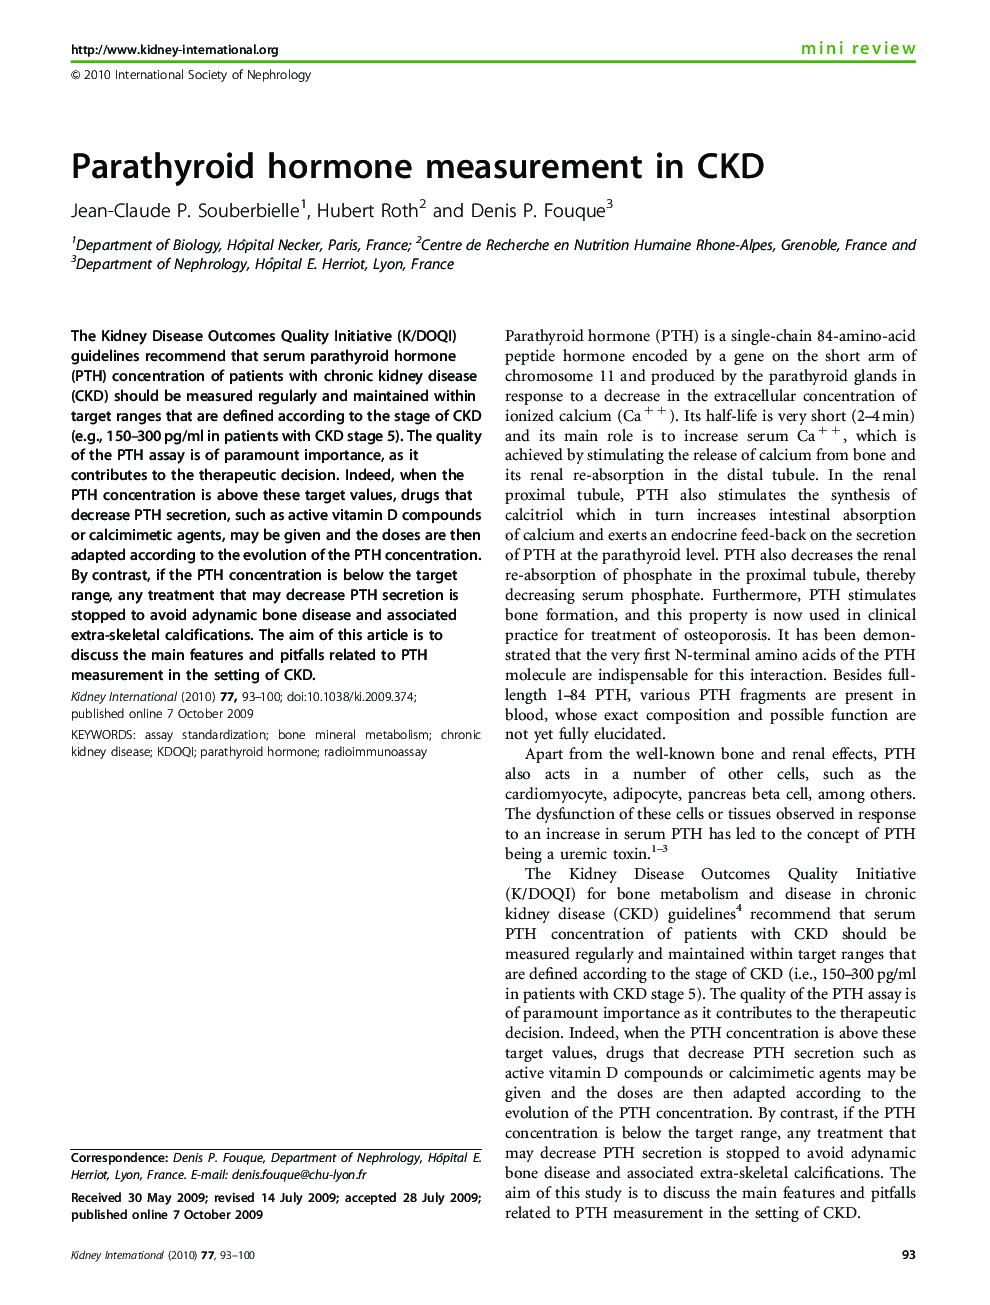 Parathyroid hormone measurement in CKD 